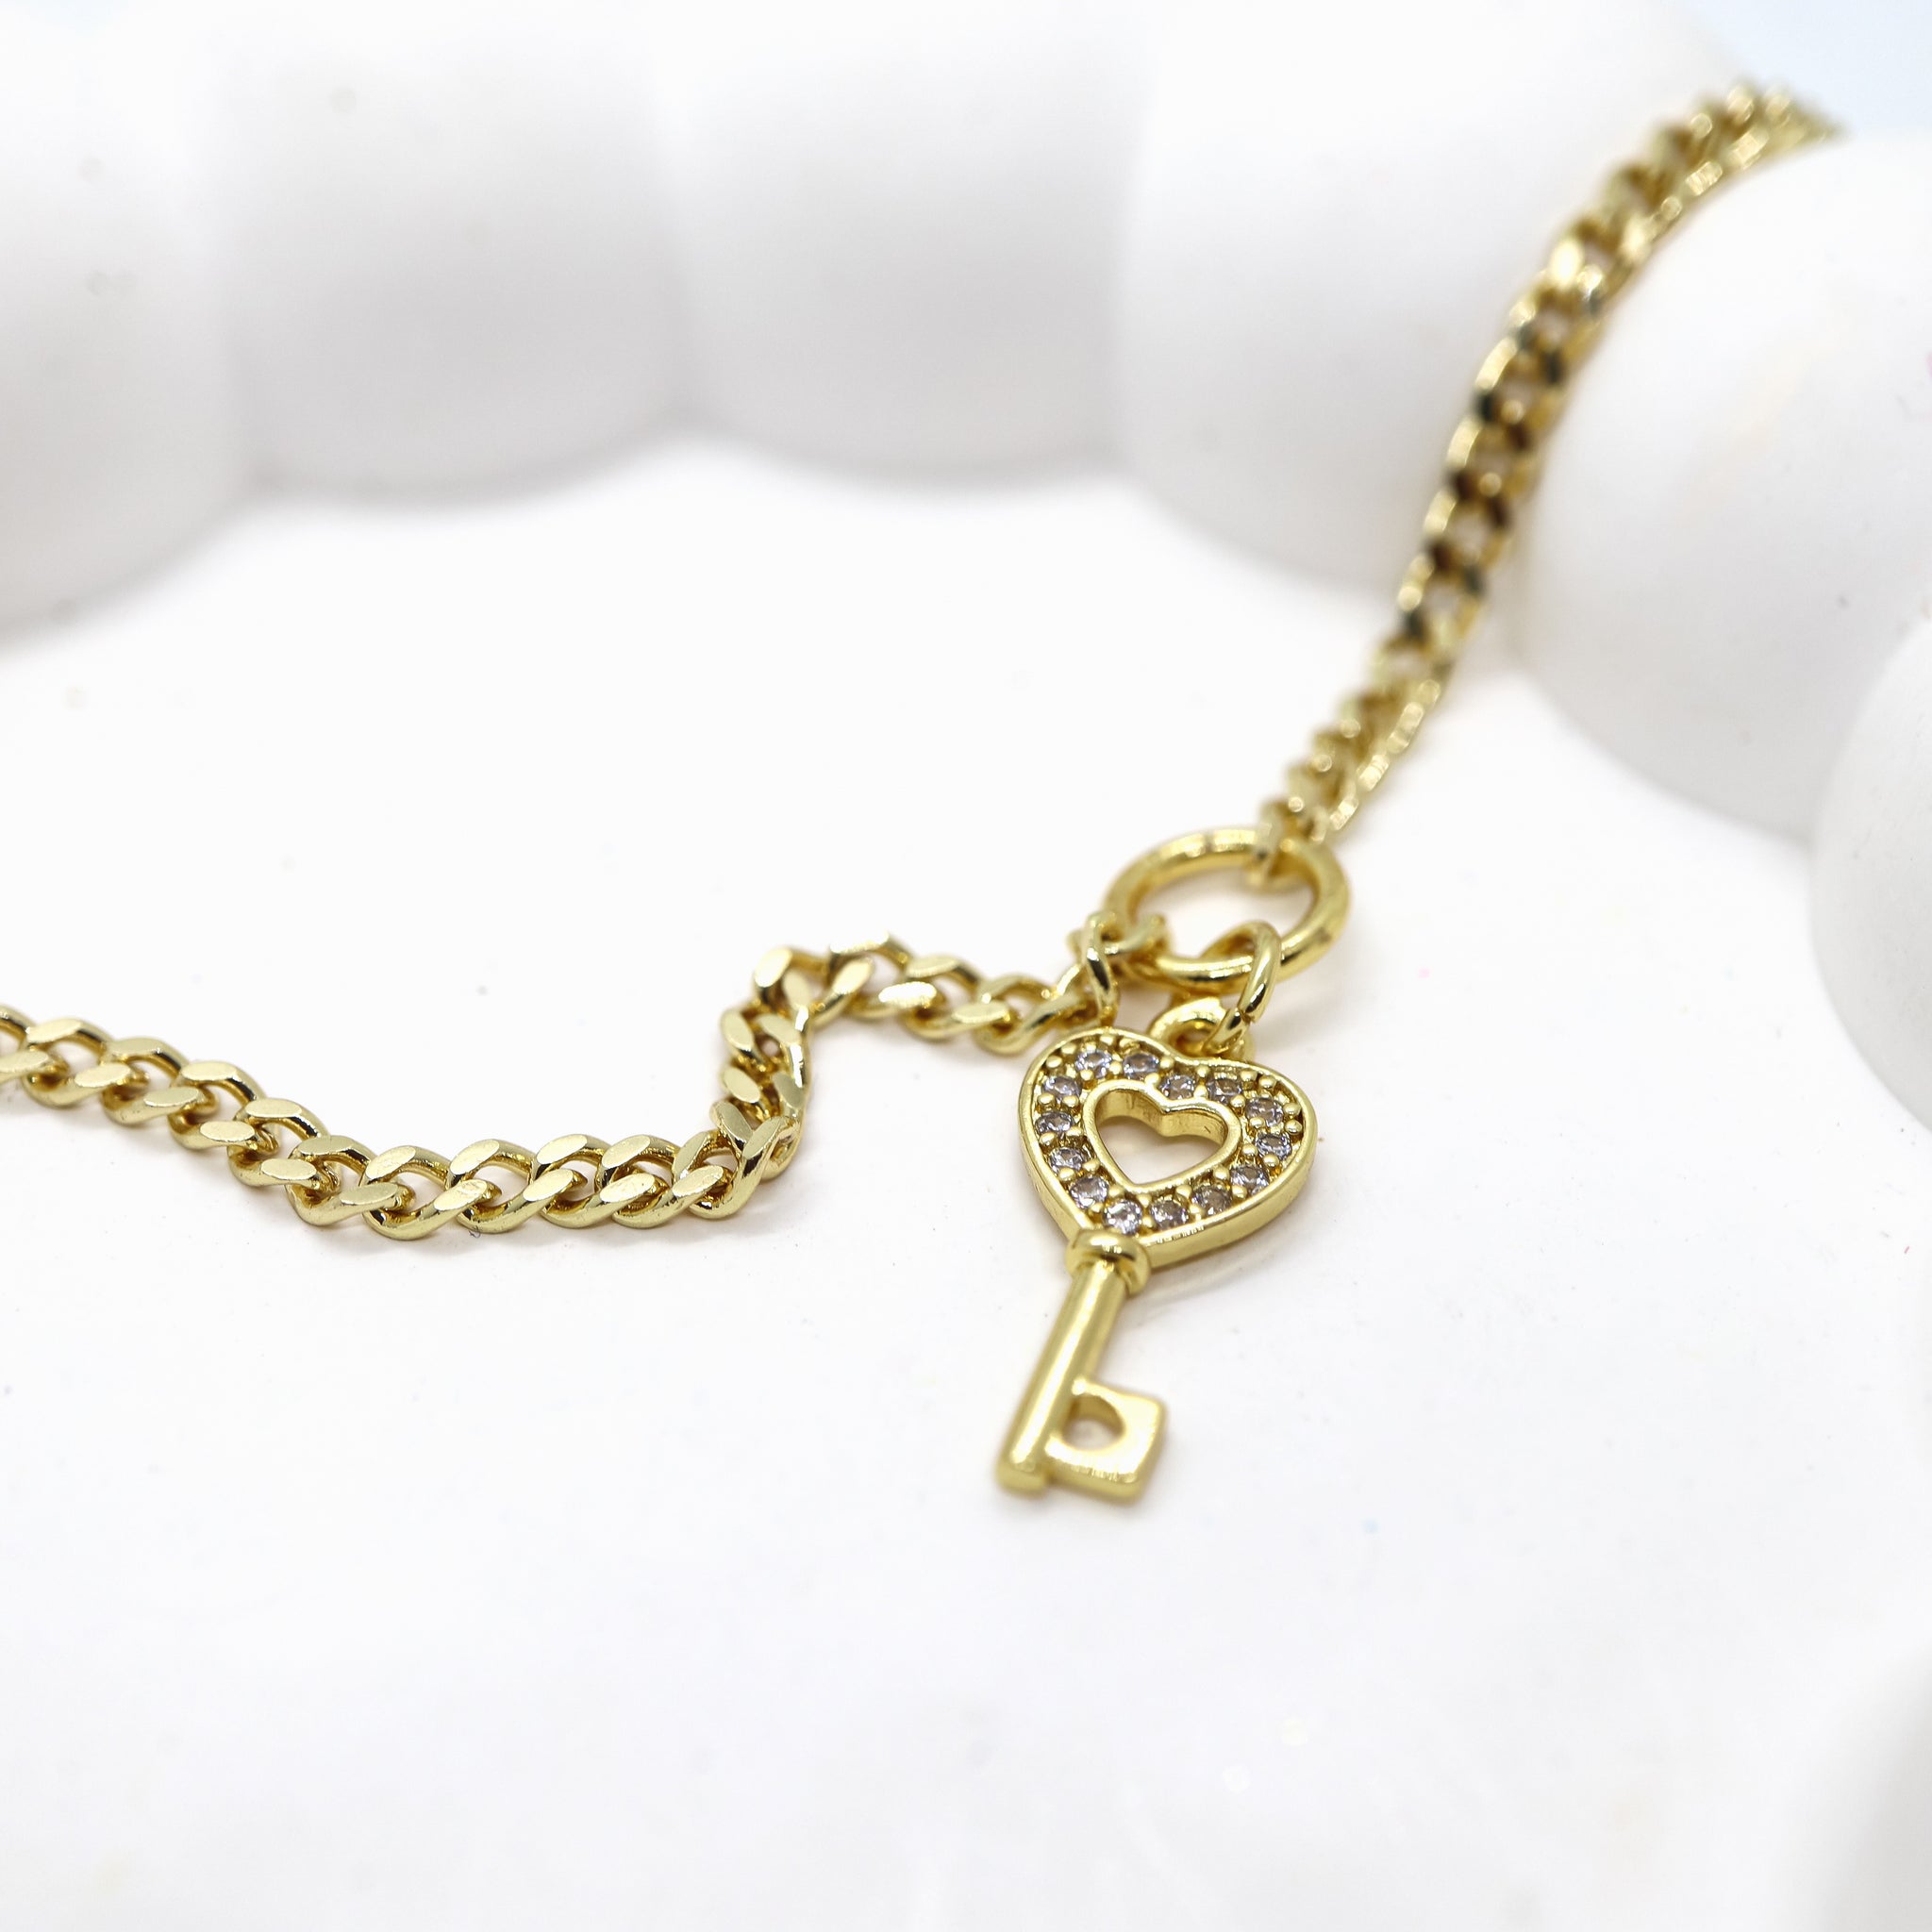 18k Goldplated Heartfelt Key Charm Necklace